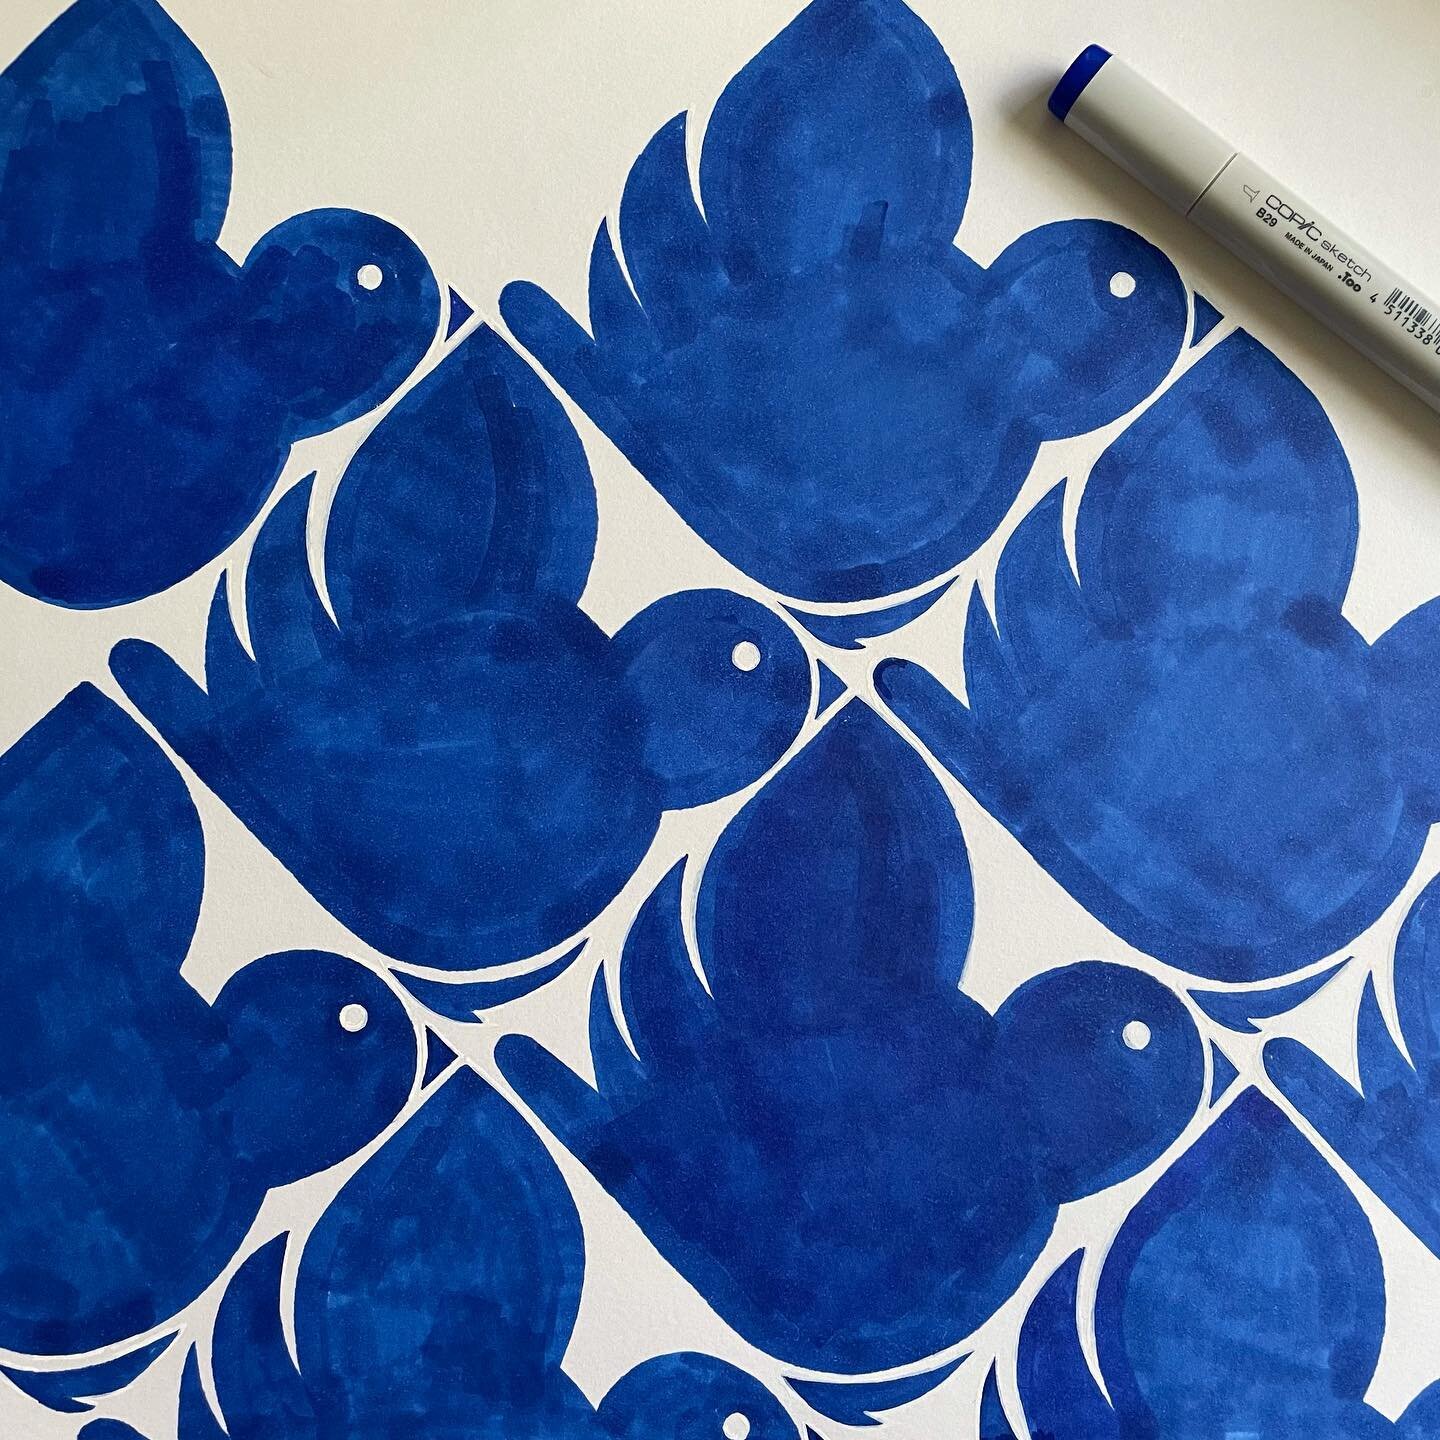 Modernism feels blue to me. And birdies. 
Day 10-11 #patternprintober 

#patternprintober2021 #modernism #drawing #copics #canson #copic #birds #bluebirds #pattern #print #printdesign #printdesigner #m&ouml;nster #f&aring;glar #m&ouml;nsterformgivare